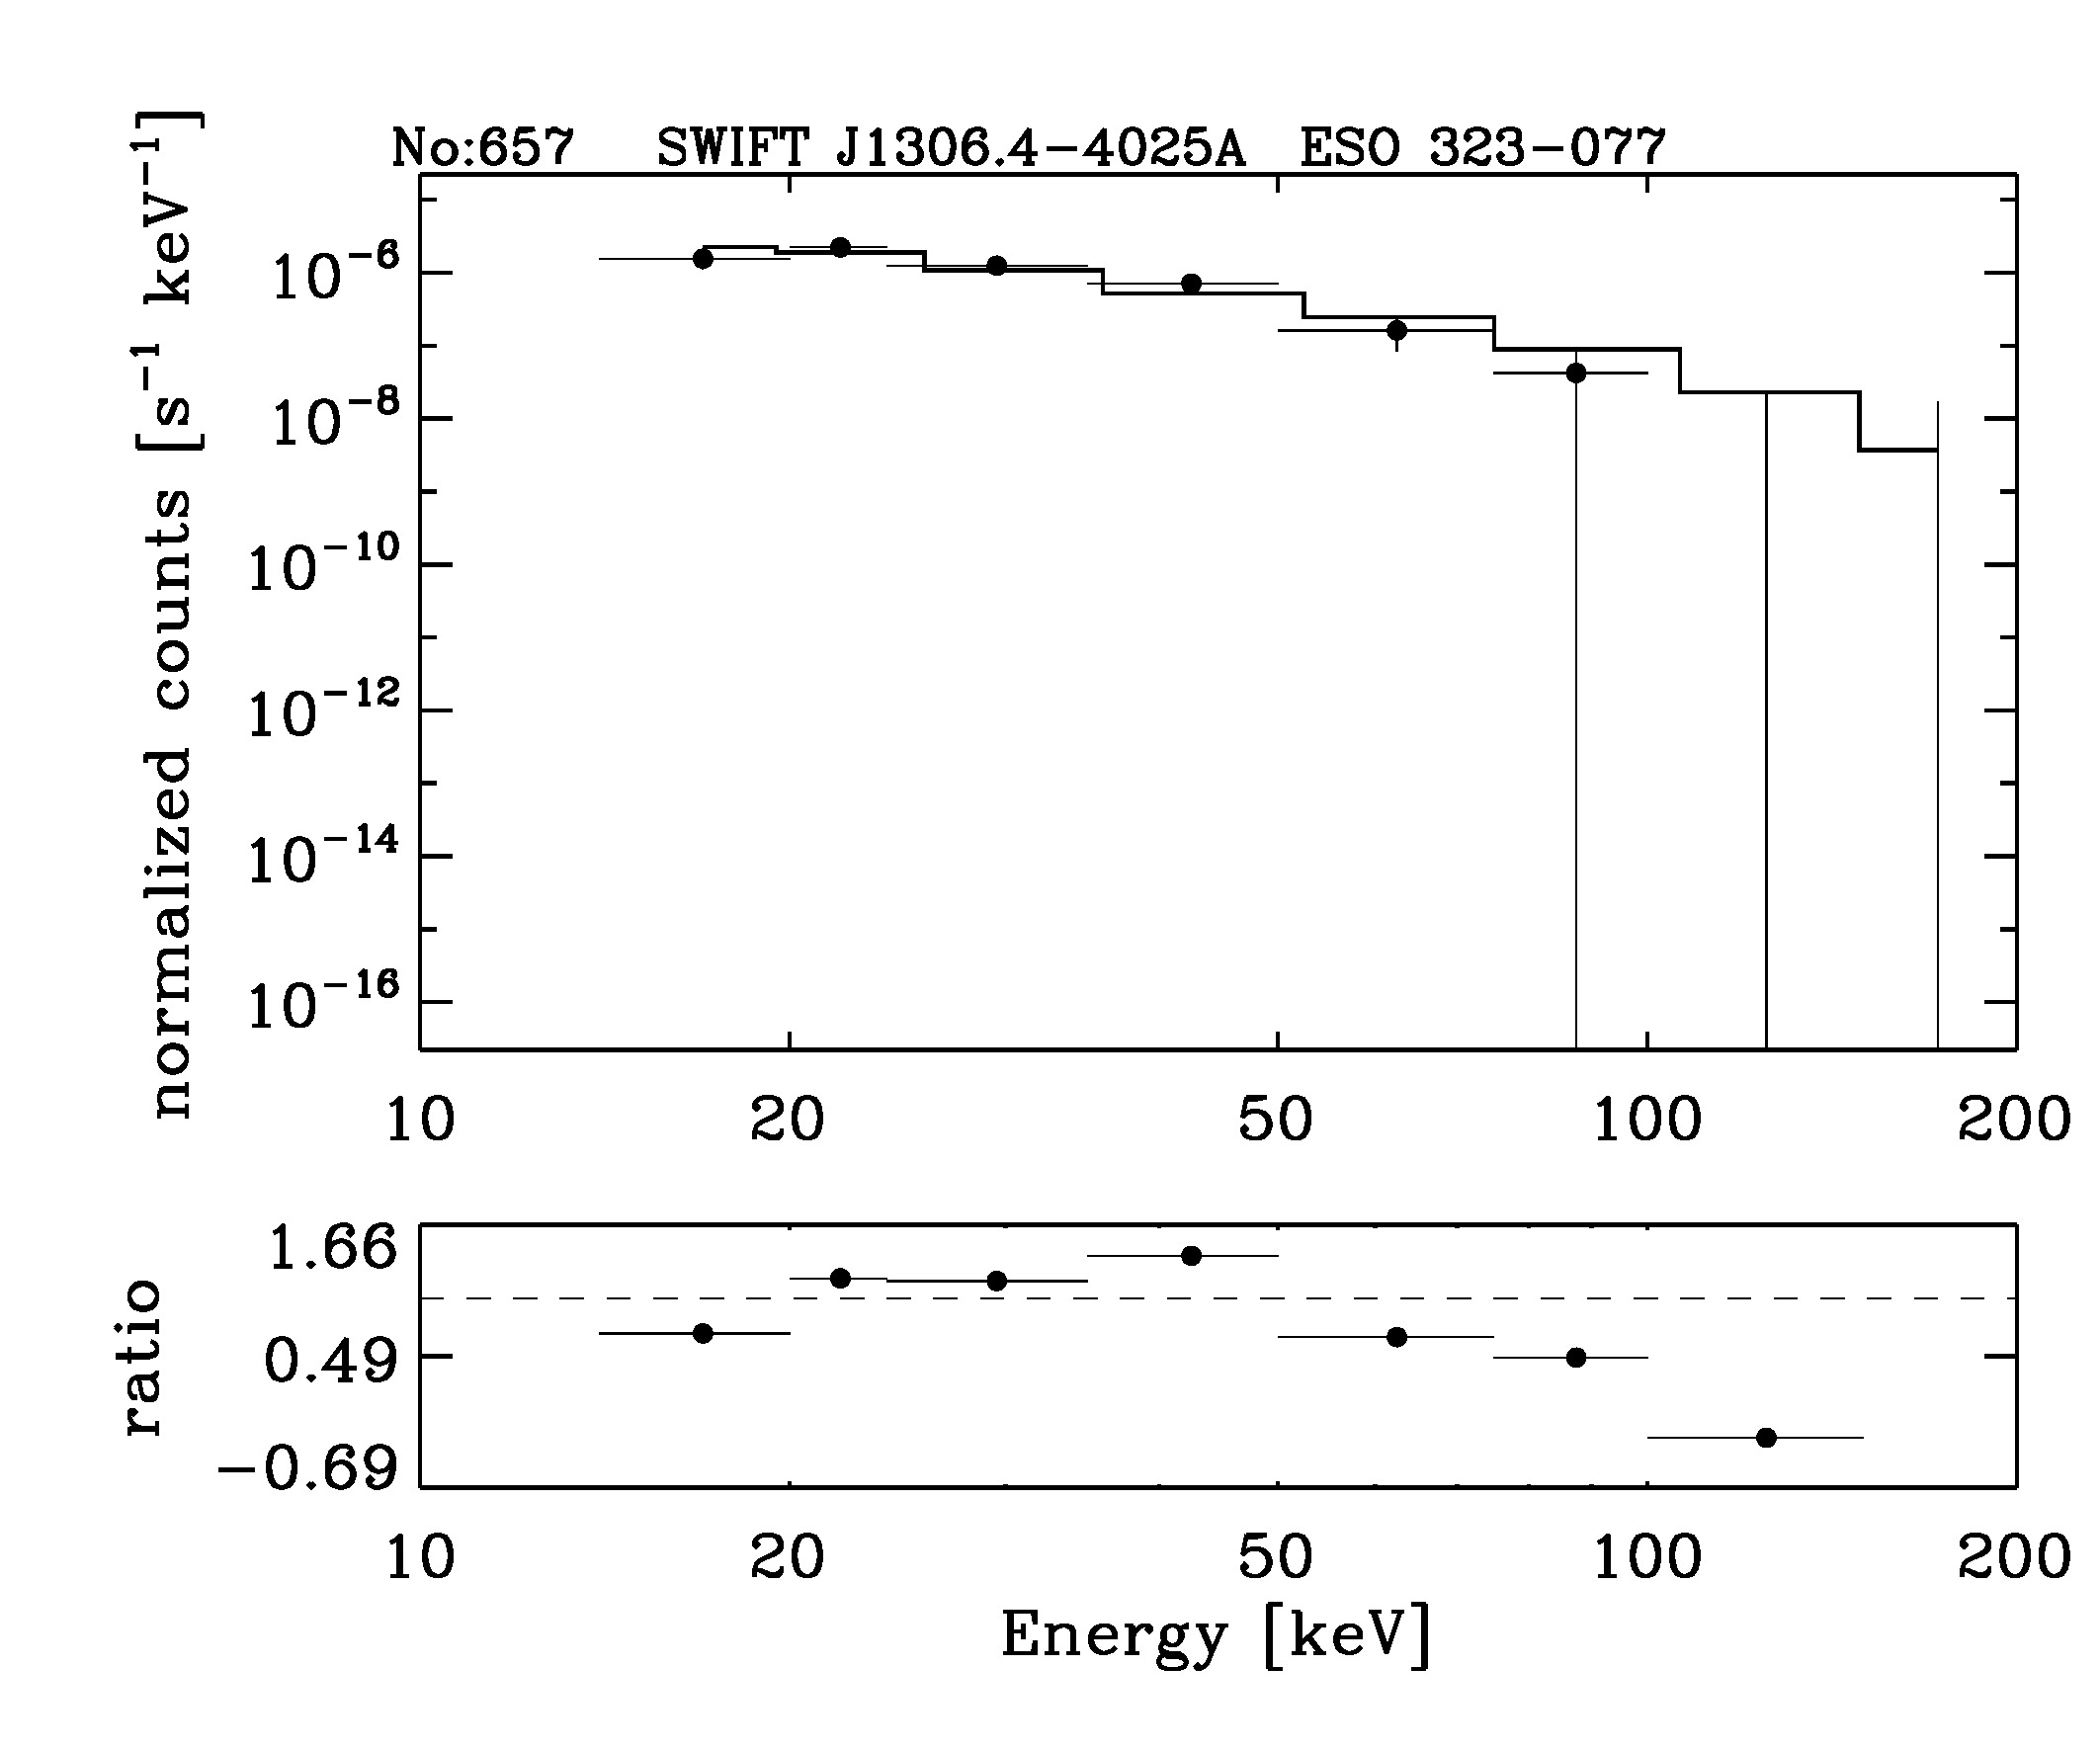 BAT Spectrum for SWIFT J1306.4-4025A